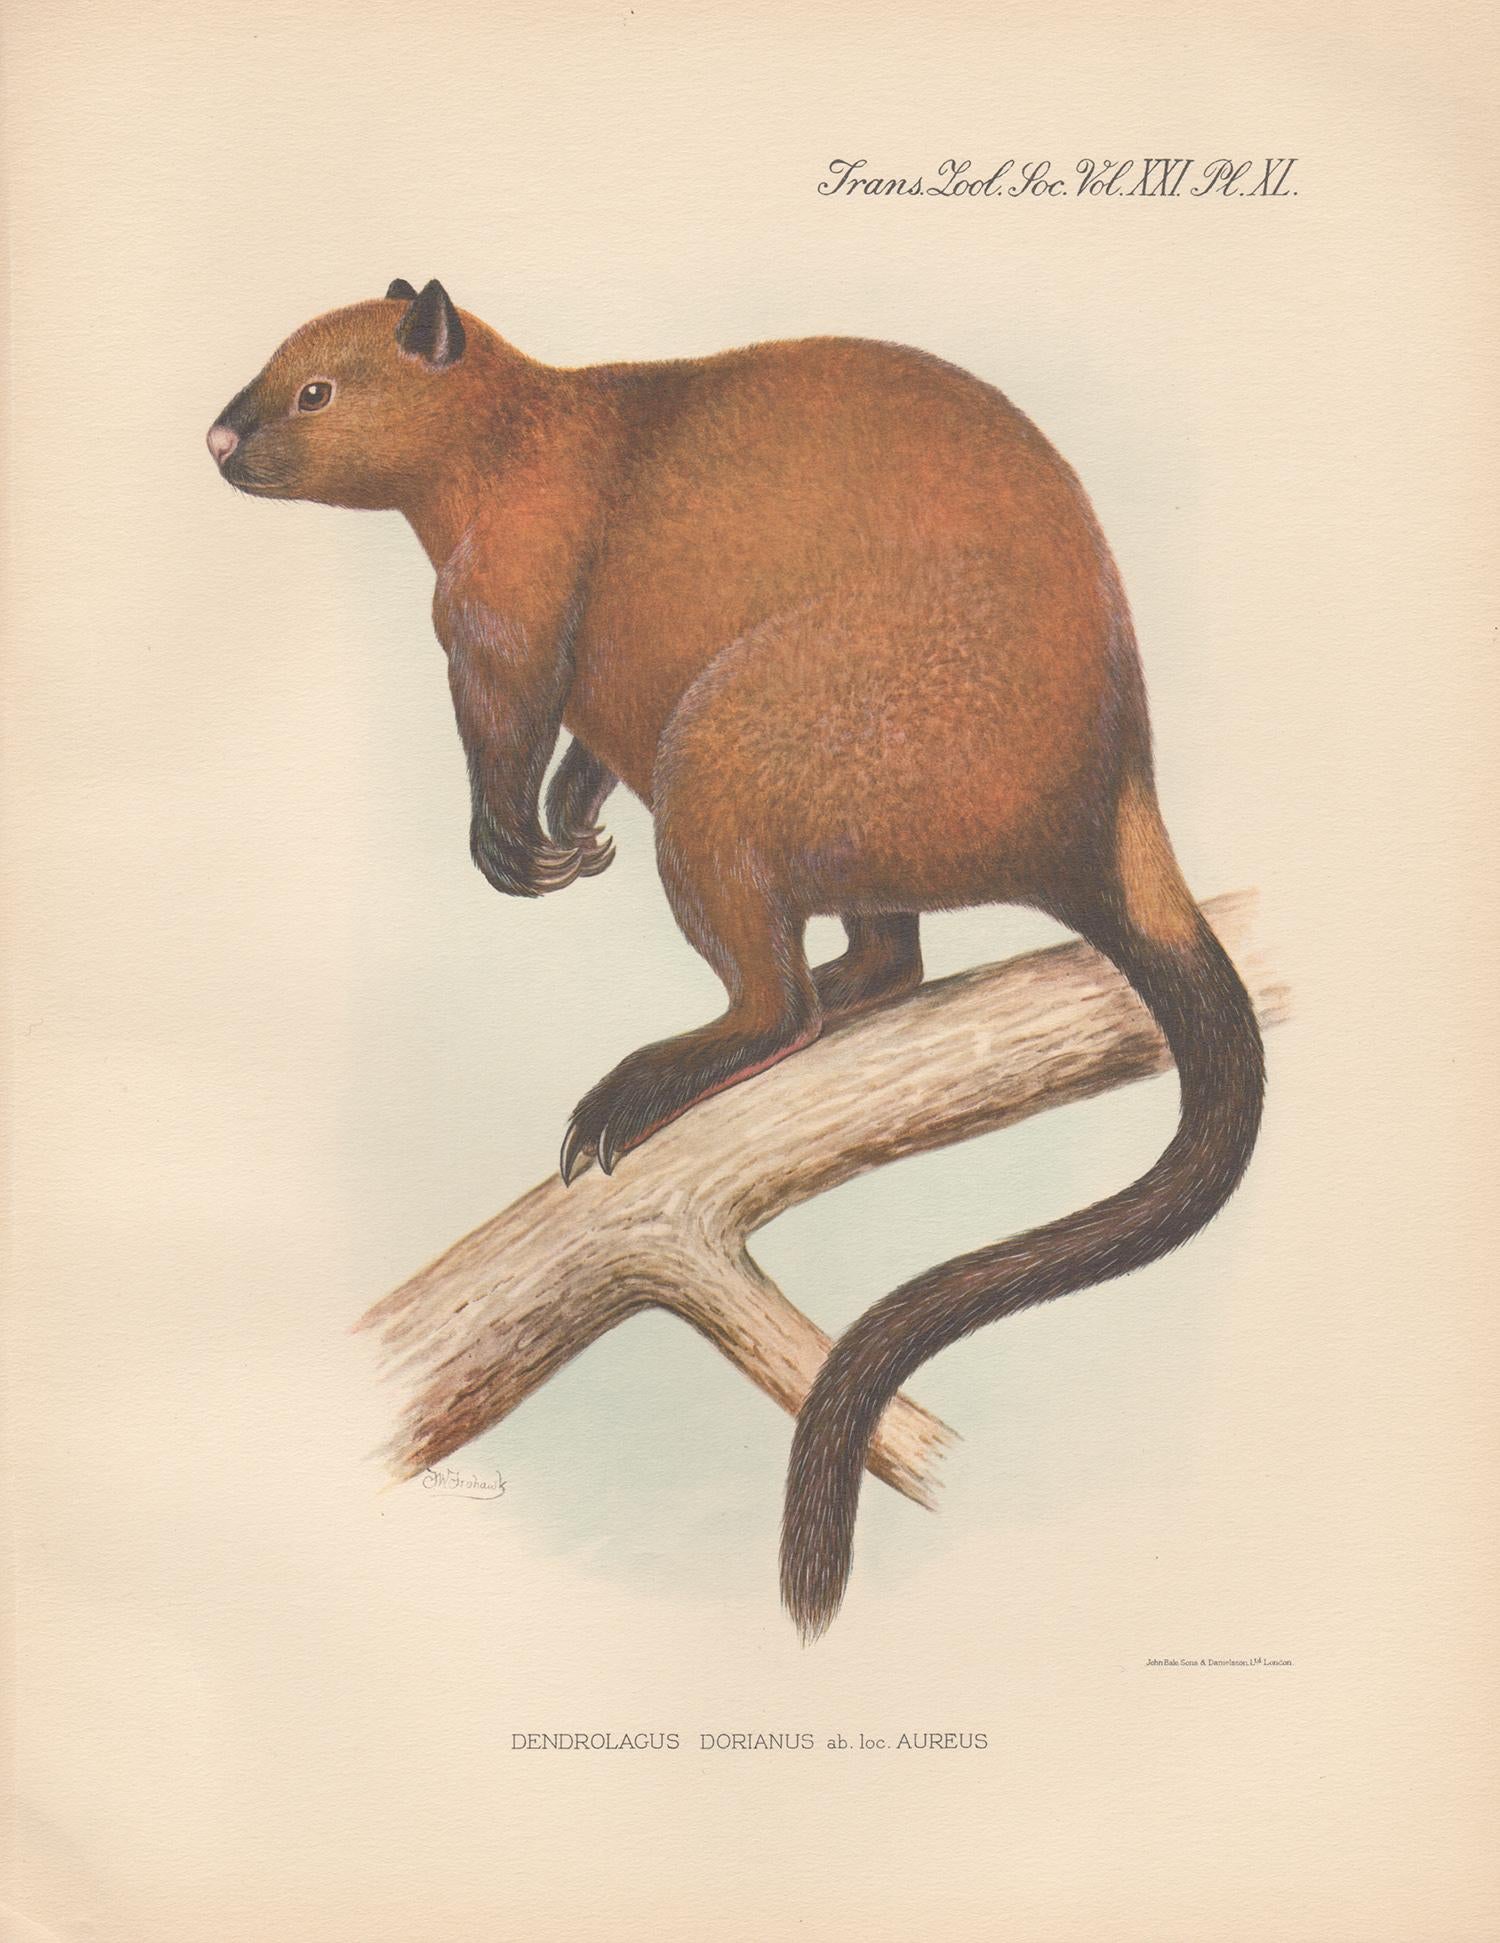 Frederick William Frohawk Animal Print - Doria's Tree Kangaroo, New Guinea natural history animal lithograph, 1936